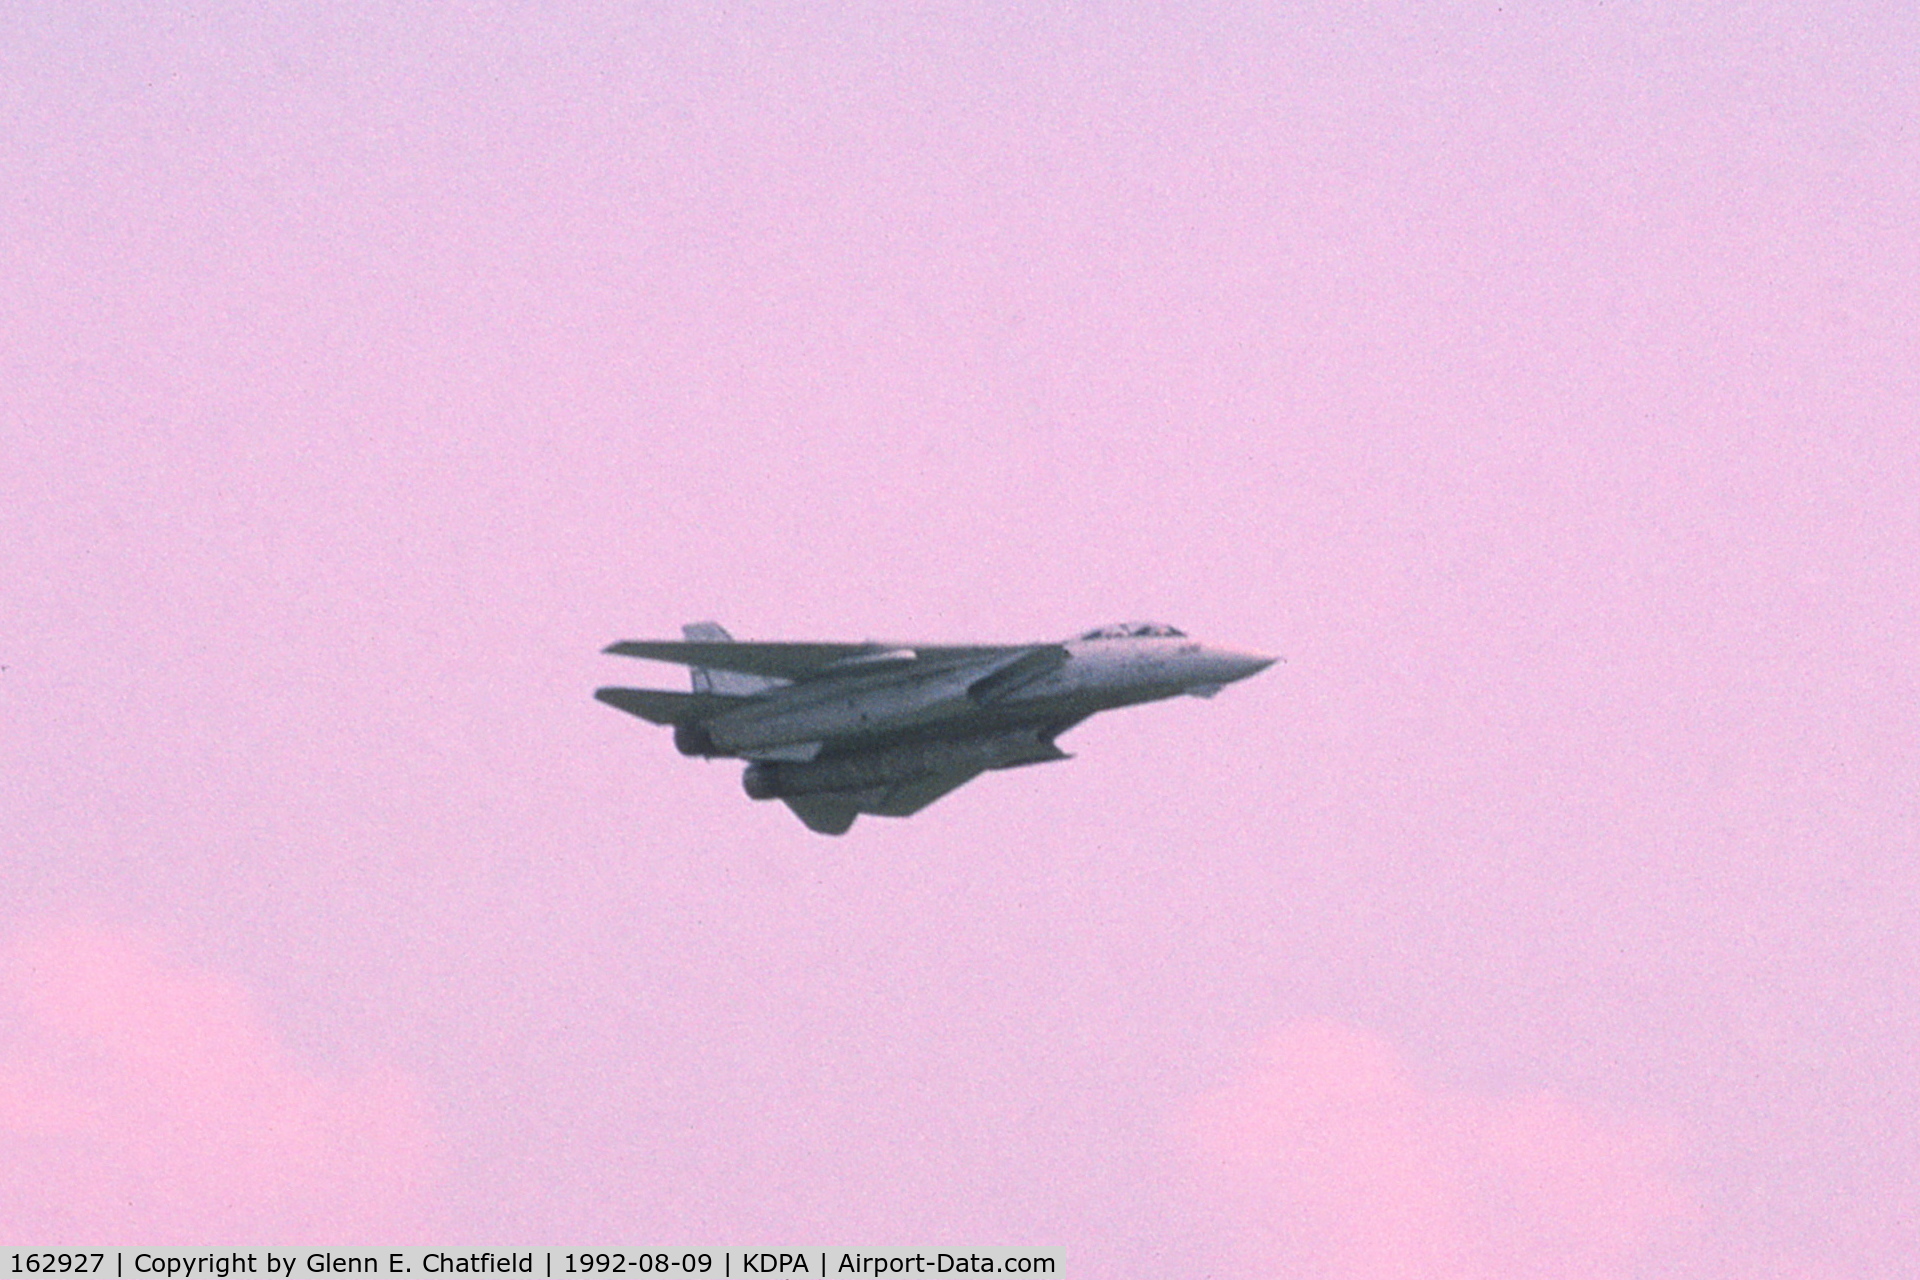 162927, Grumman F-14B Tomcat C/N 575, Air show demonstration.
35mm slide with bad developing